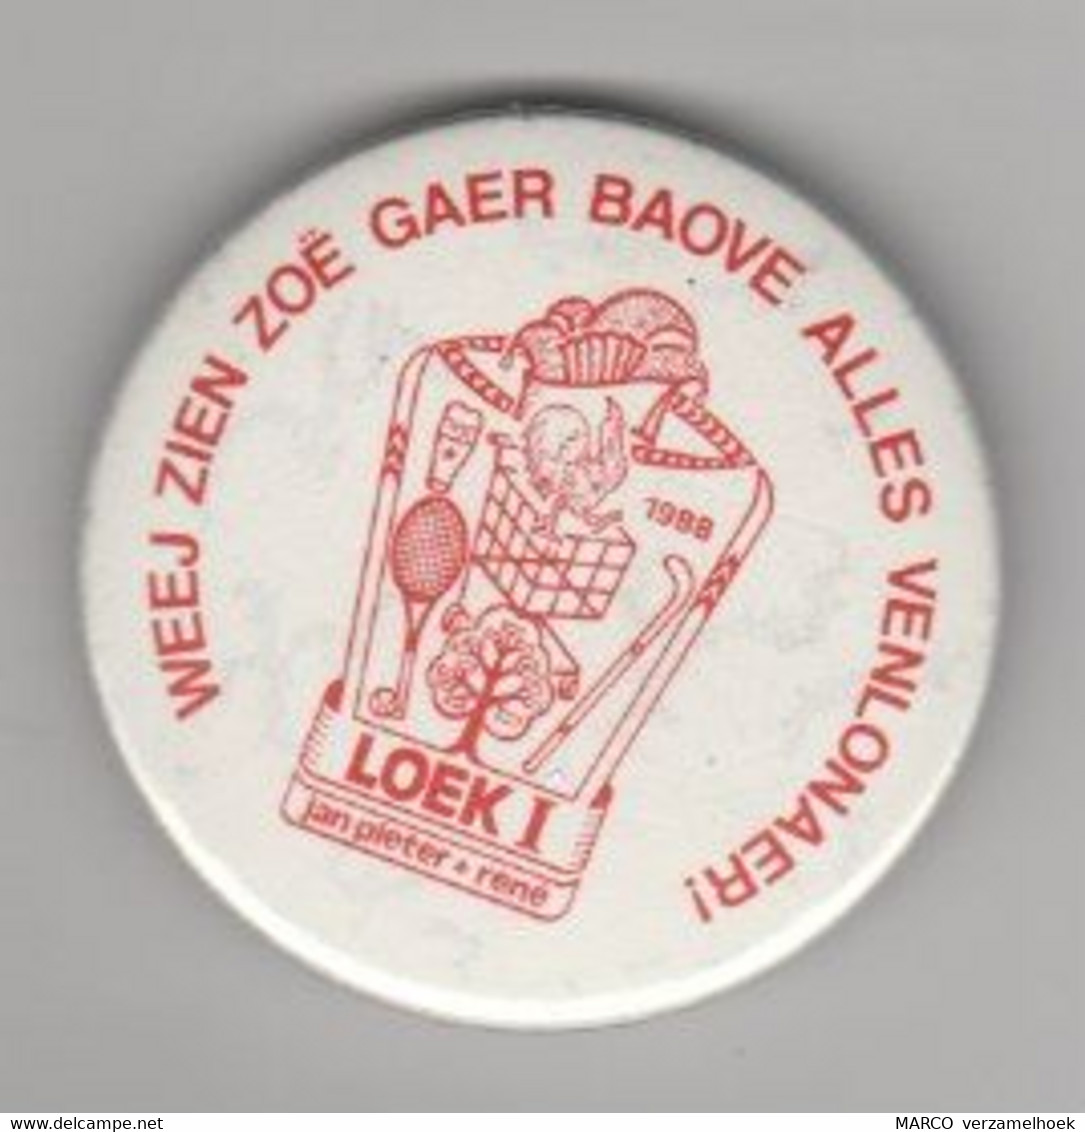 Pin-speld-button Weej Zien Zoë Gaer Baove Alles Venlonaer! Carnaval Venlo 1988 Hockey-tennis Loek1 - Carnaval